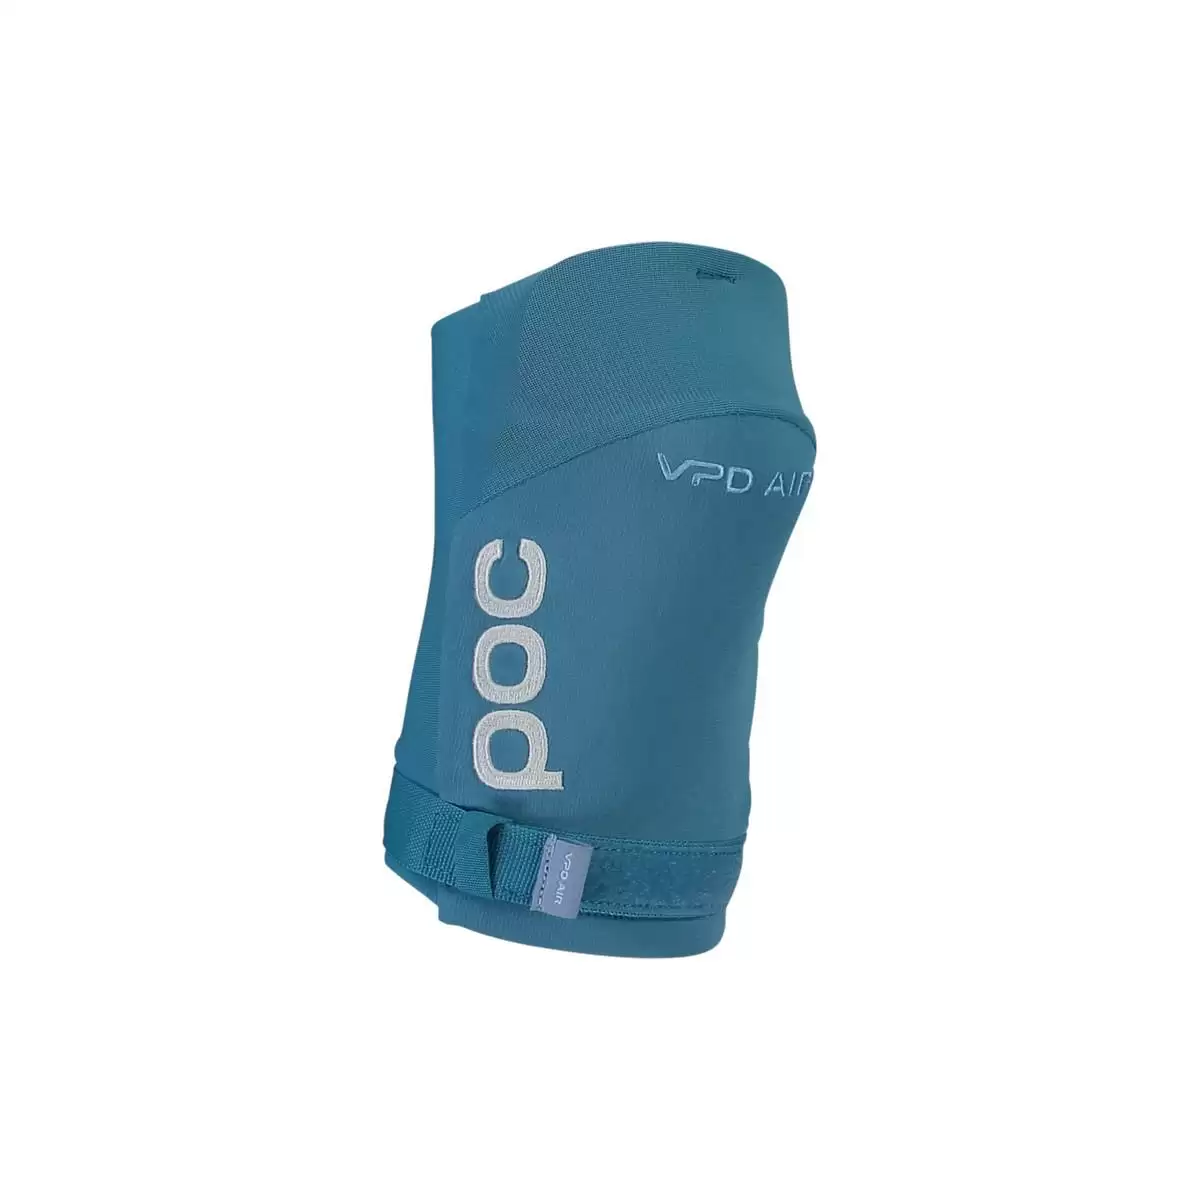 Joint VPD Air Elbow Protectors Basalt Blue Size S - image